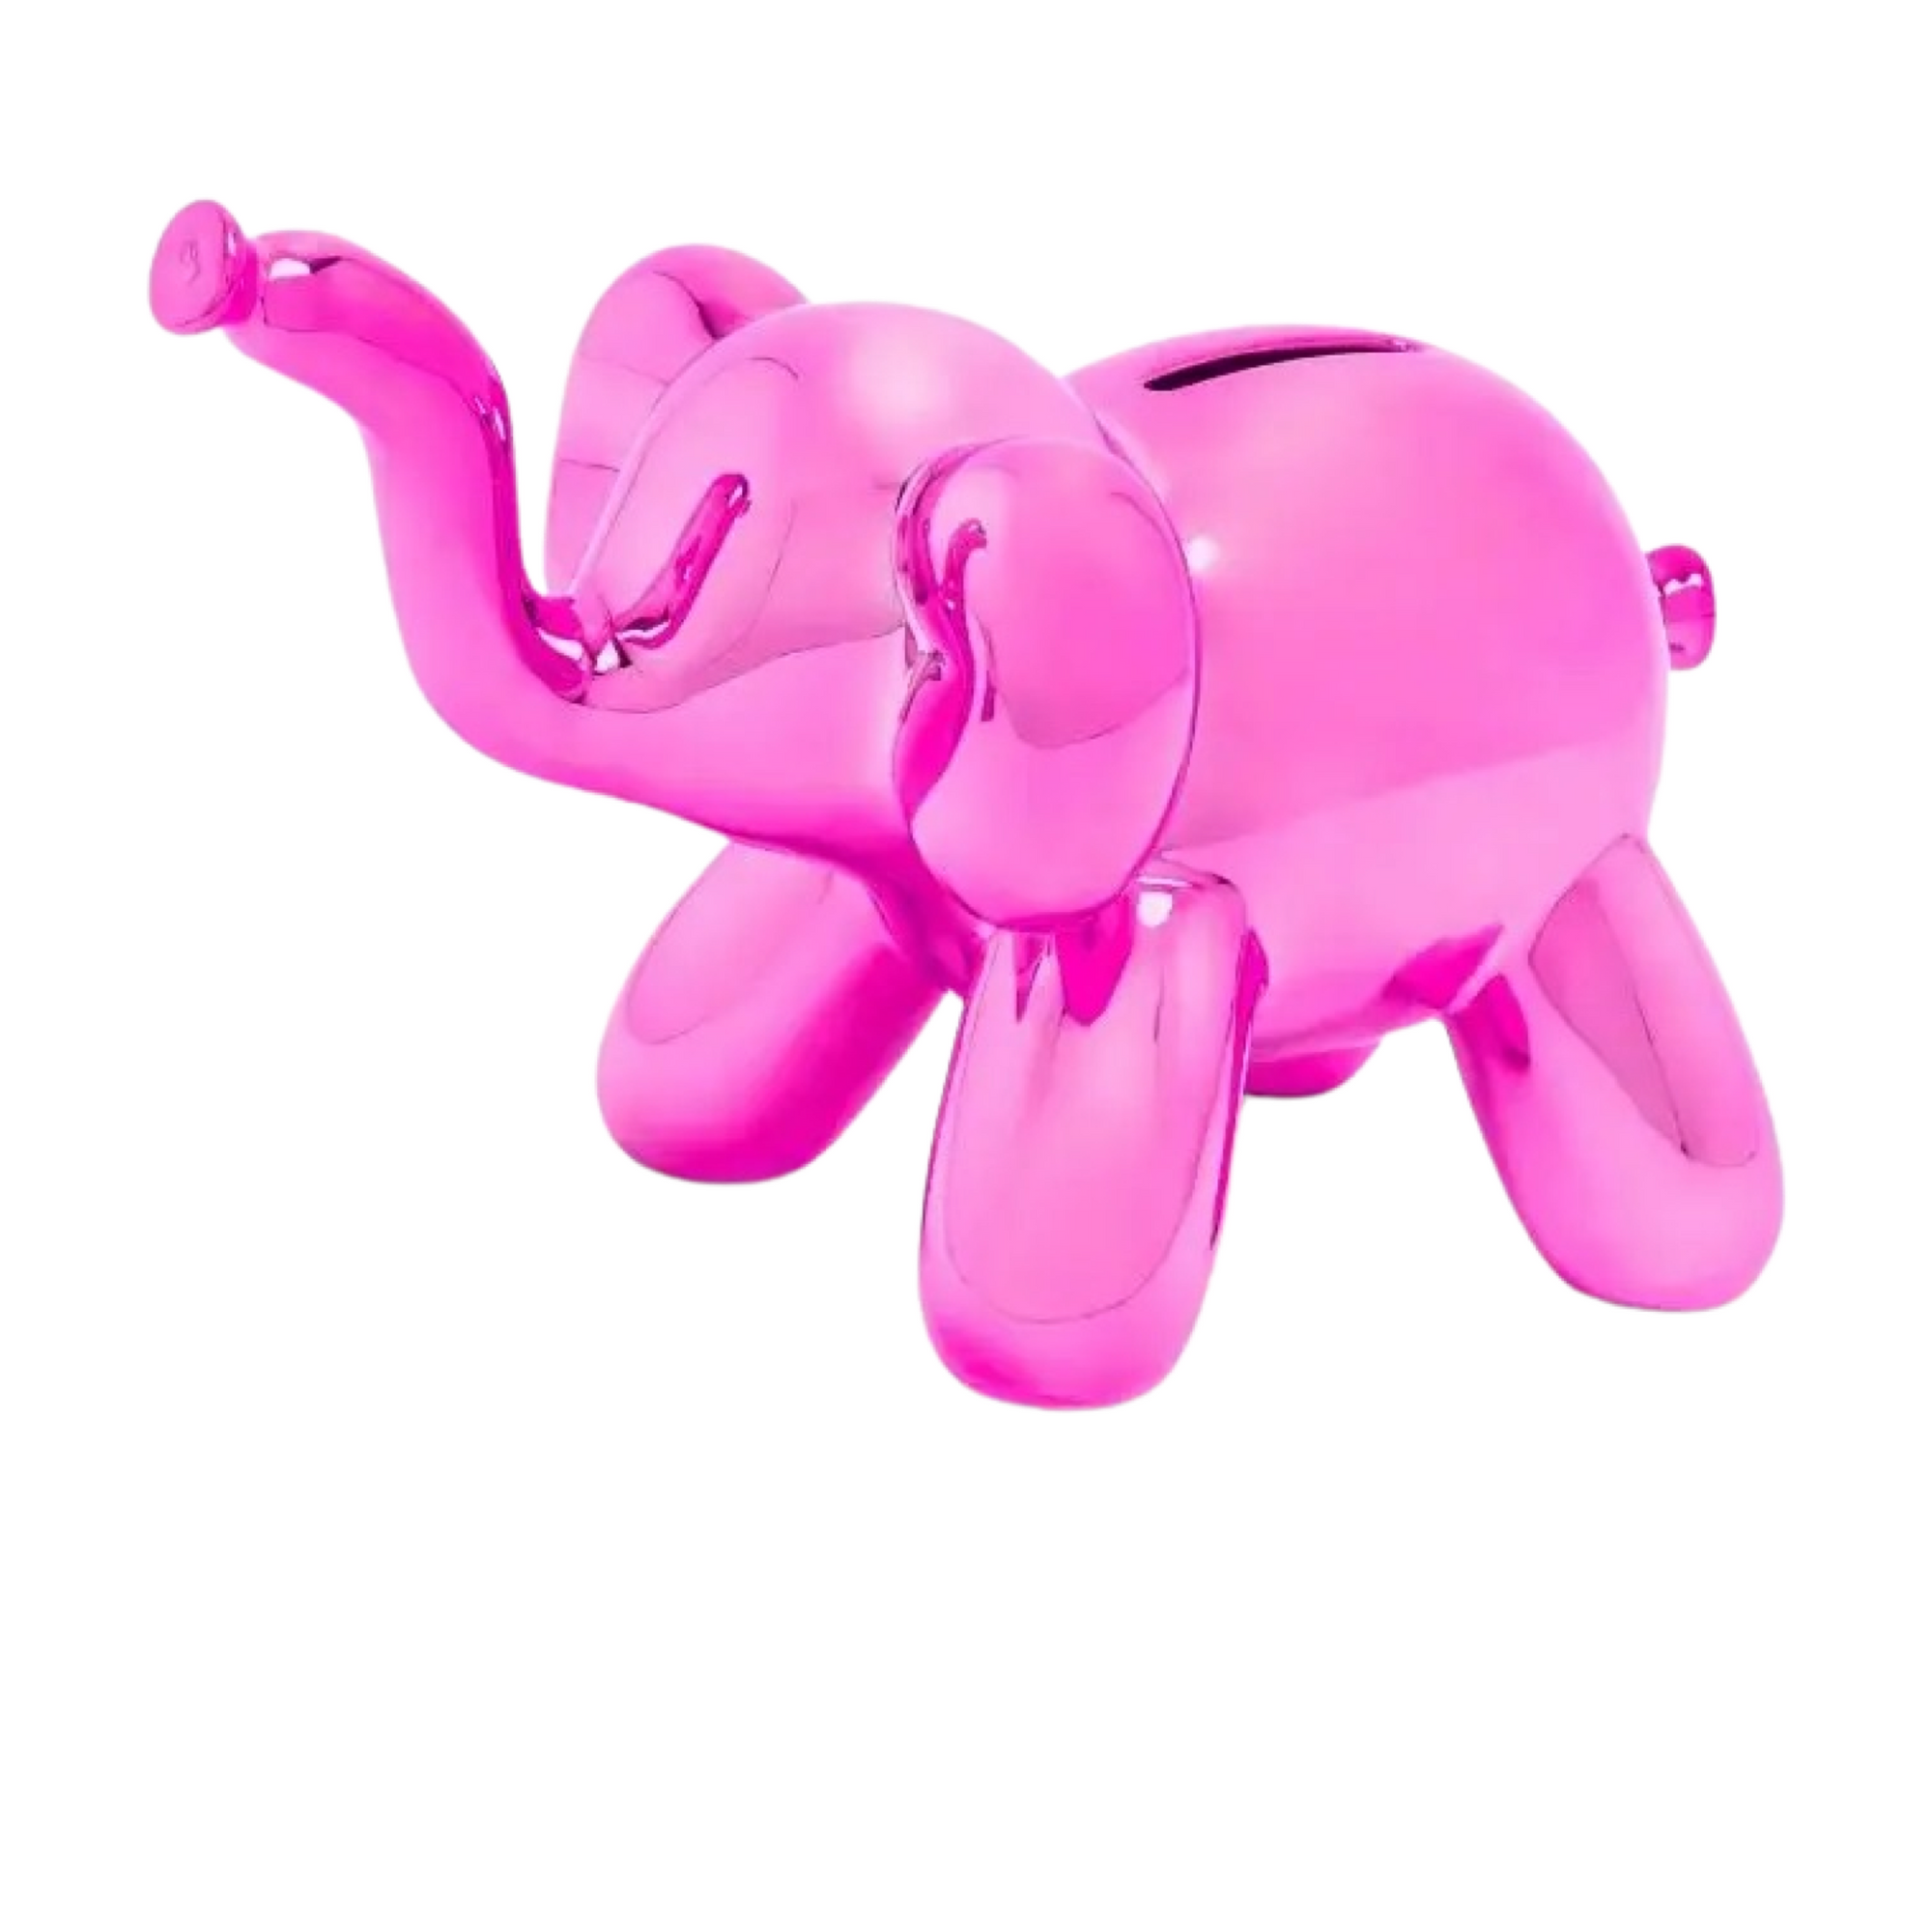 Ceramic Balloon Elephant Bank